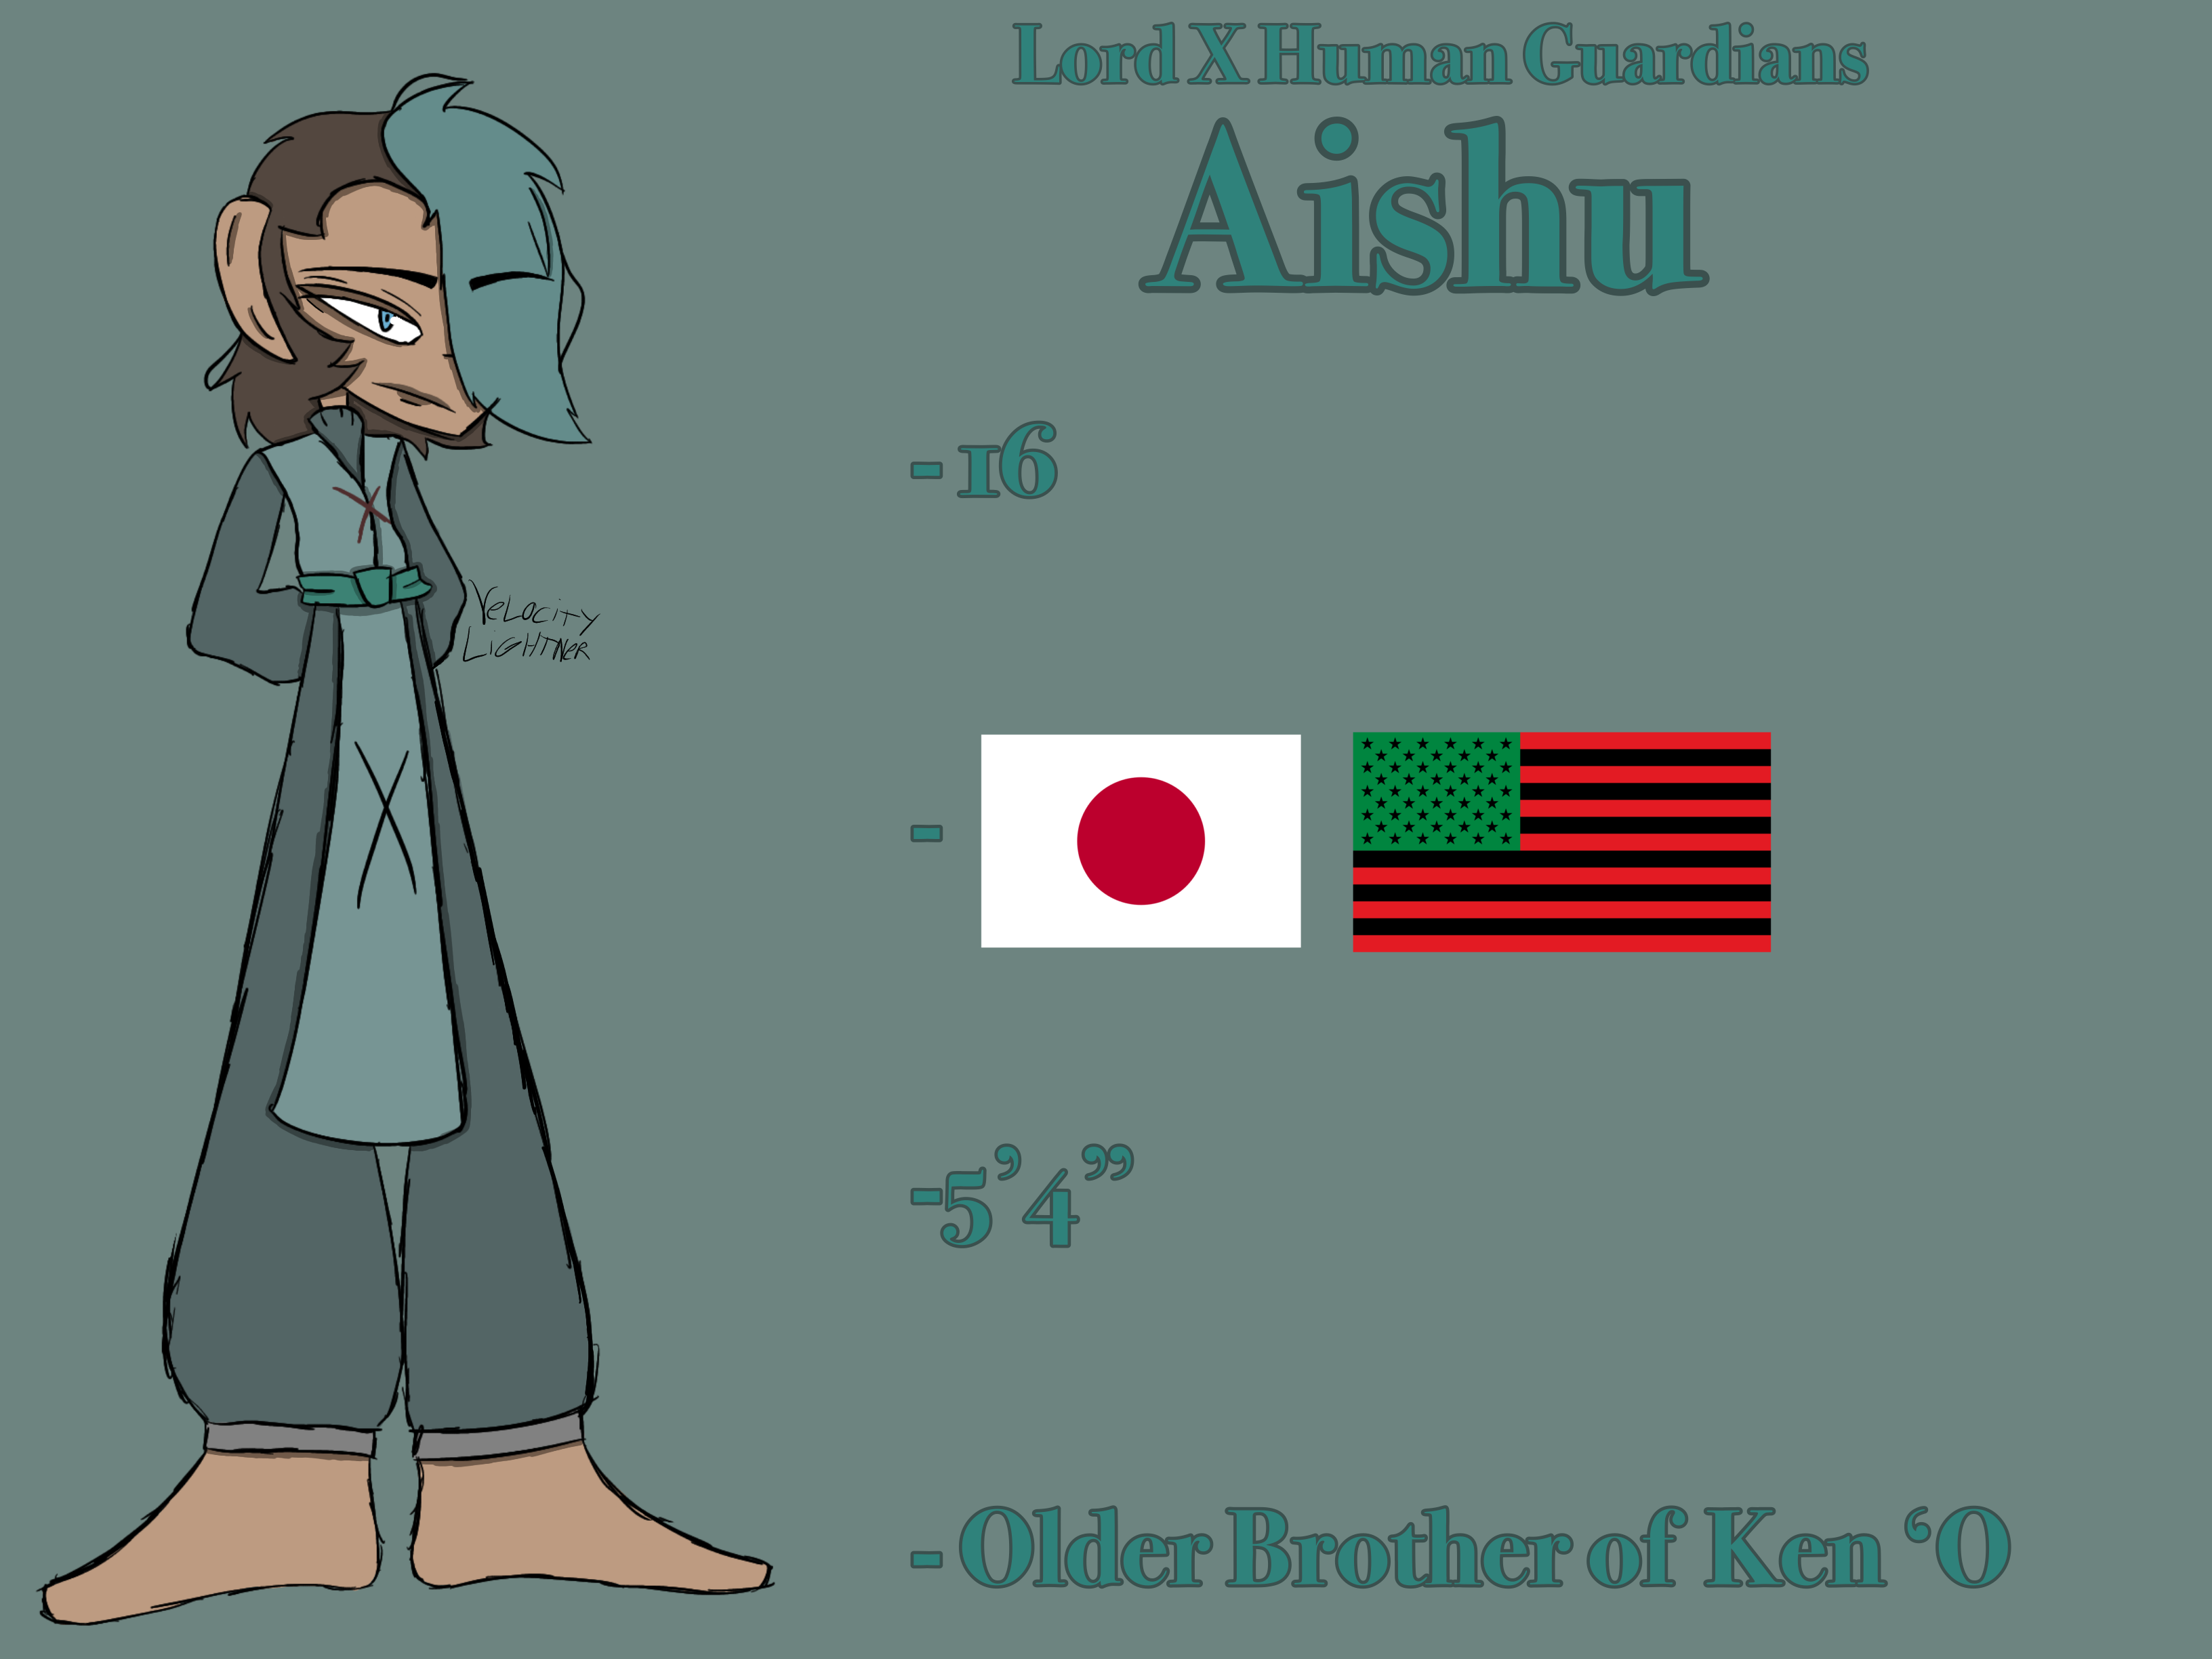 Lord X Human Guardians - Aishu by VelocityHun on DeviantArt